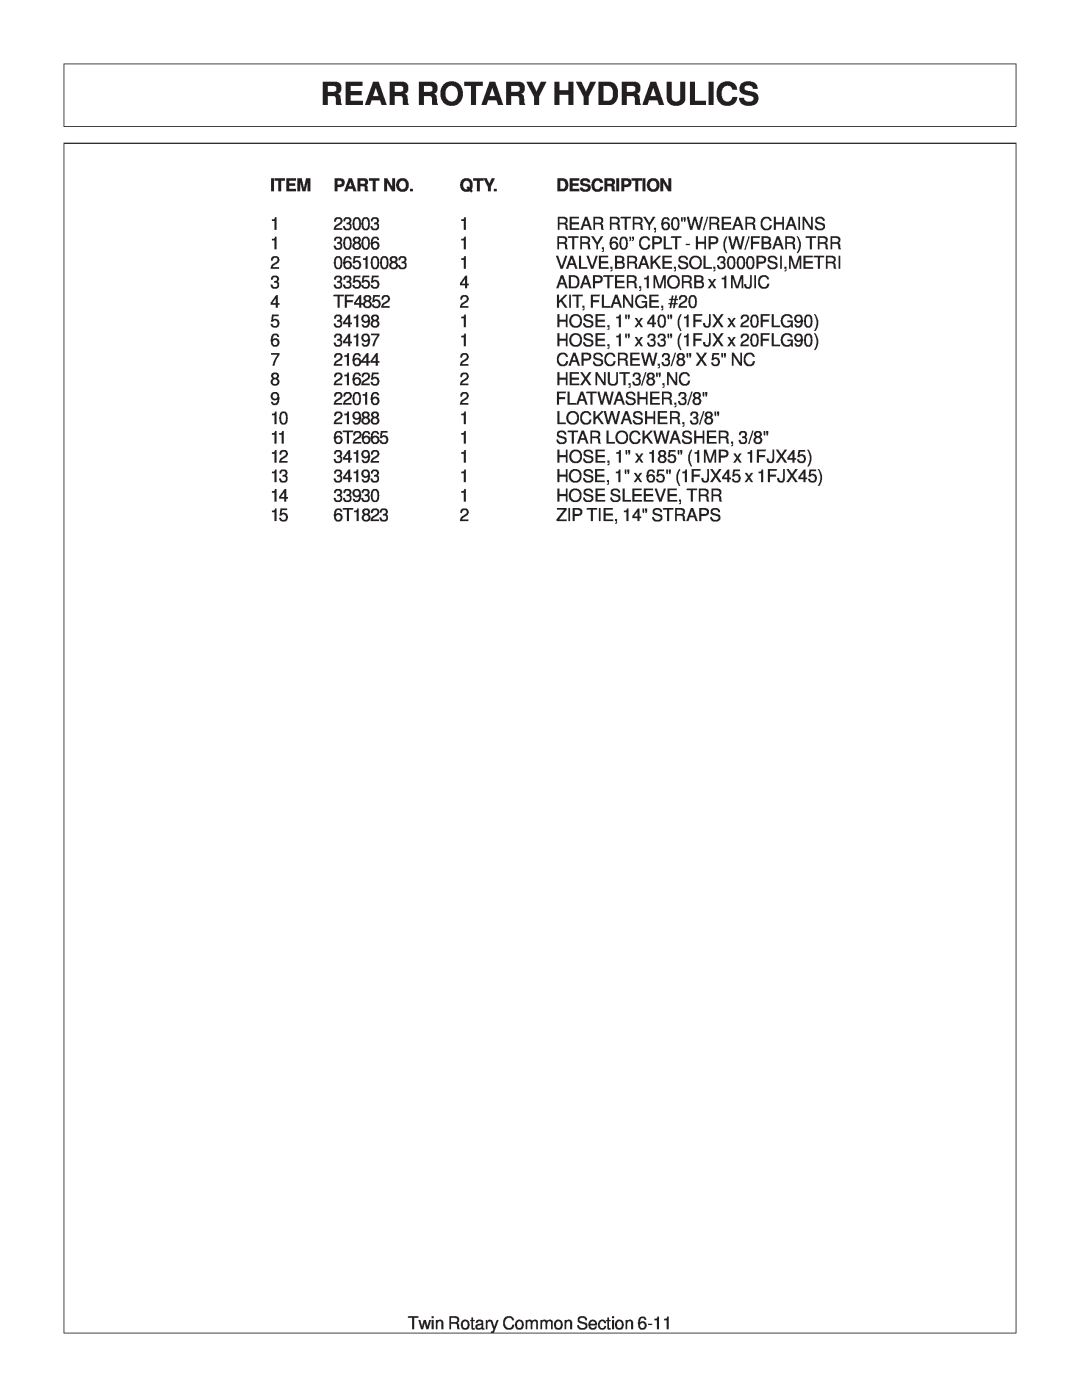 Tiger Products Co., Ltd 6020009 manual Rear Rotary Hydraulics, Description, RTRY, 60” CPLT - HP W/FBAR TRR 